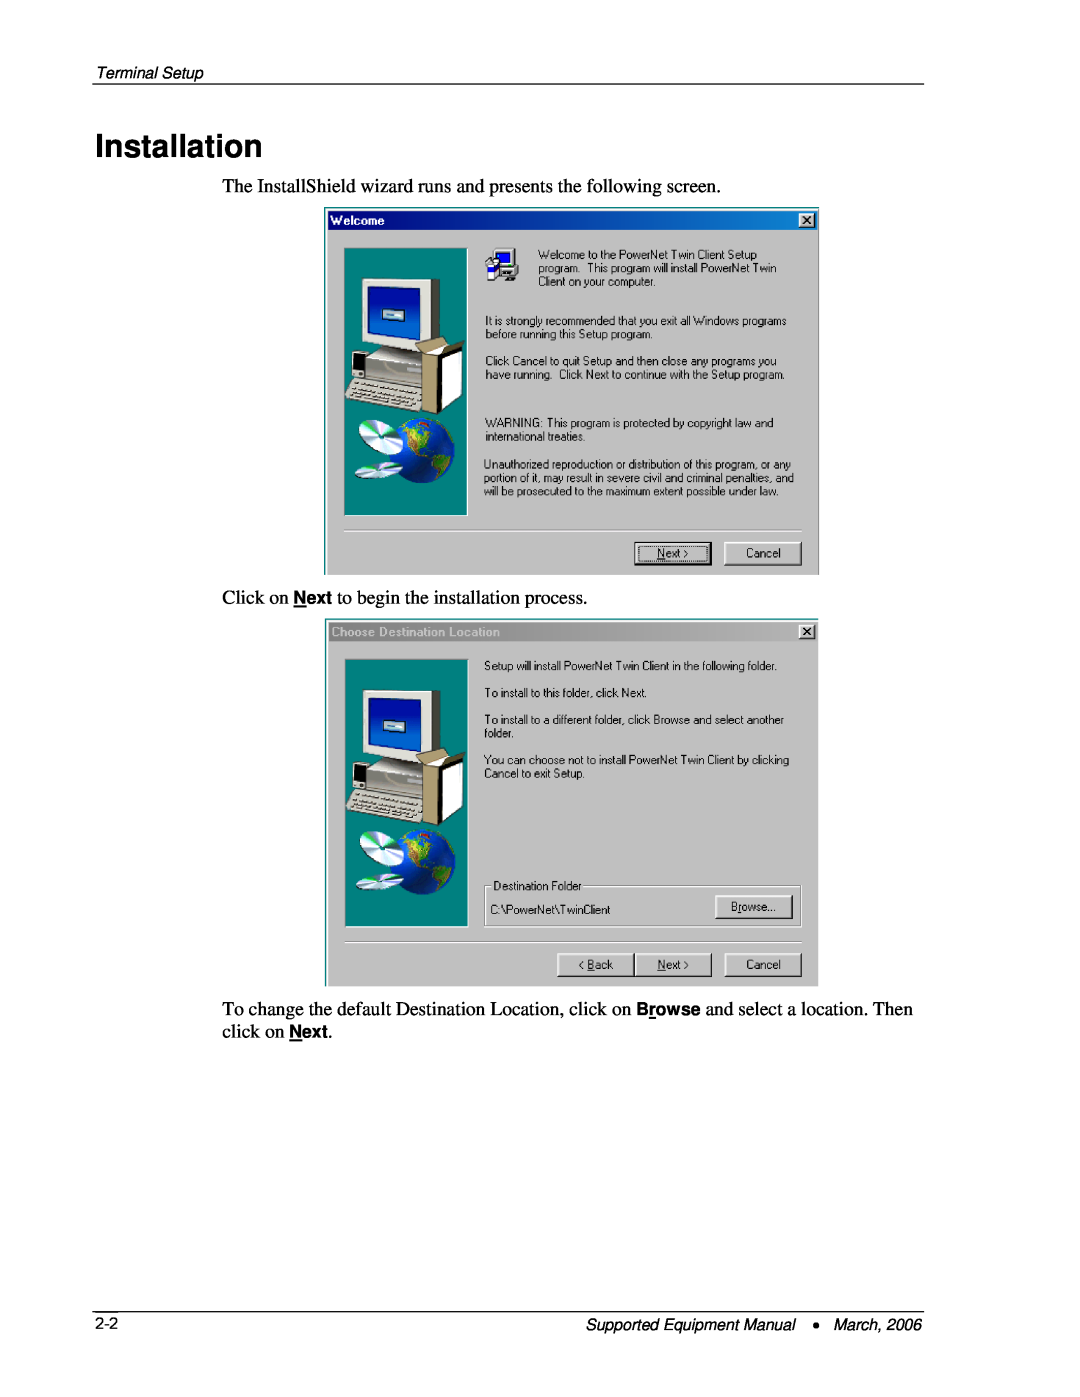 Denso BHT-7500, BHT-103 manual Installation, The InstallShield wizard runs and presents the following screen, Terminal Setup 